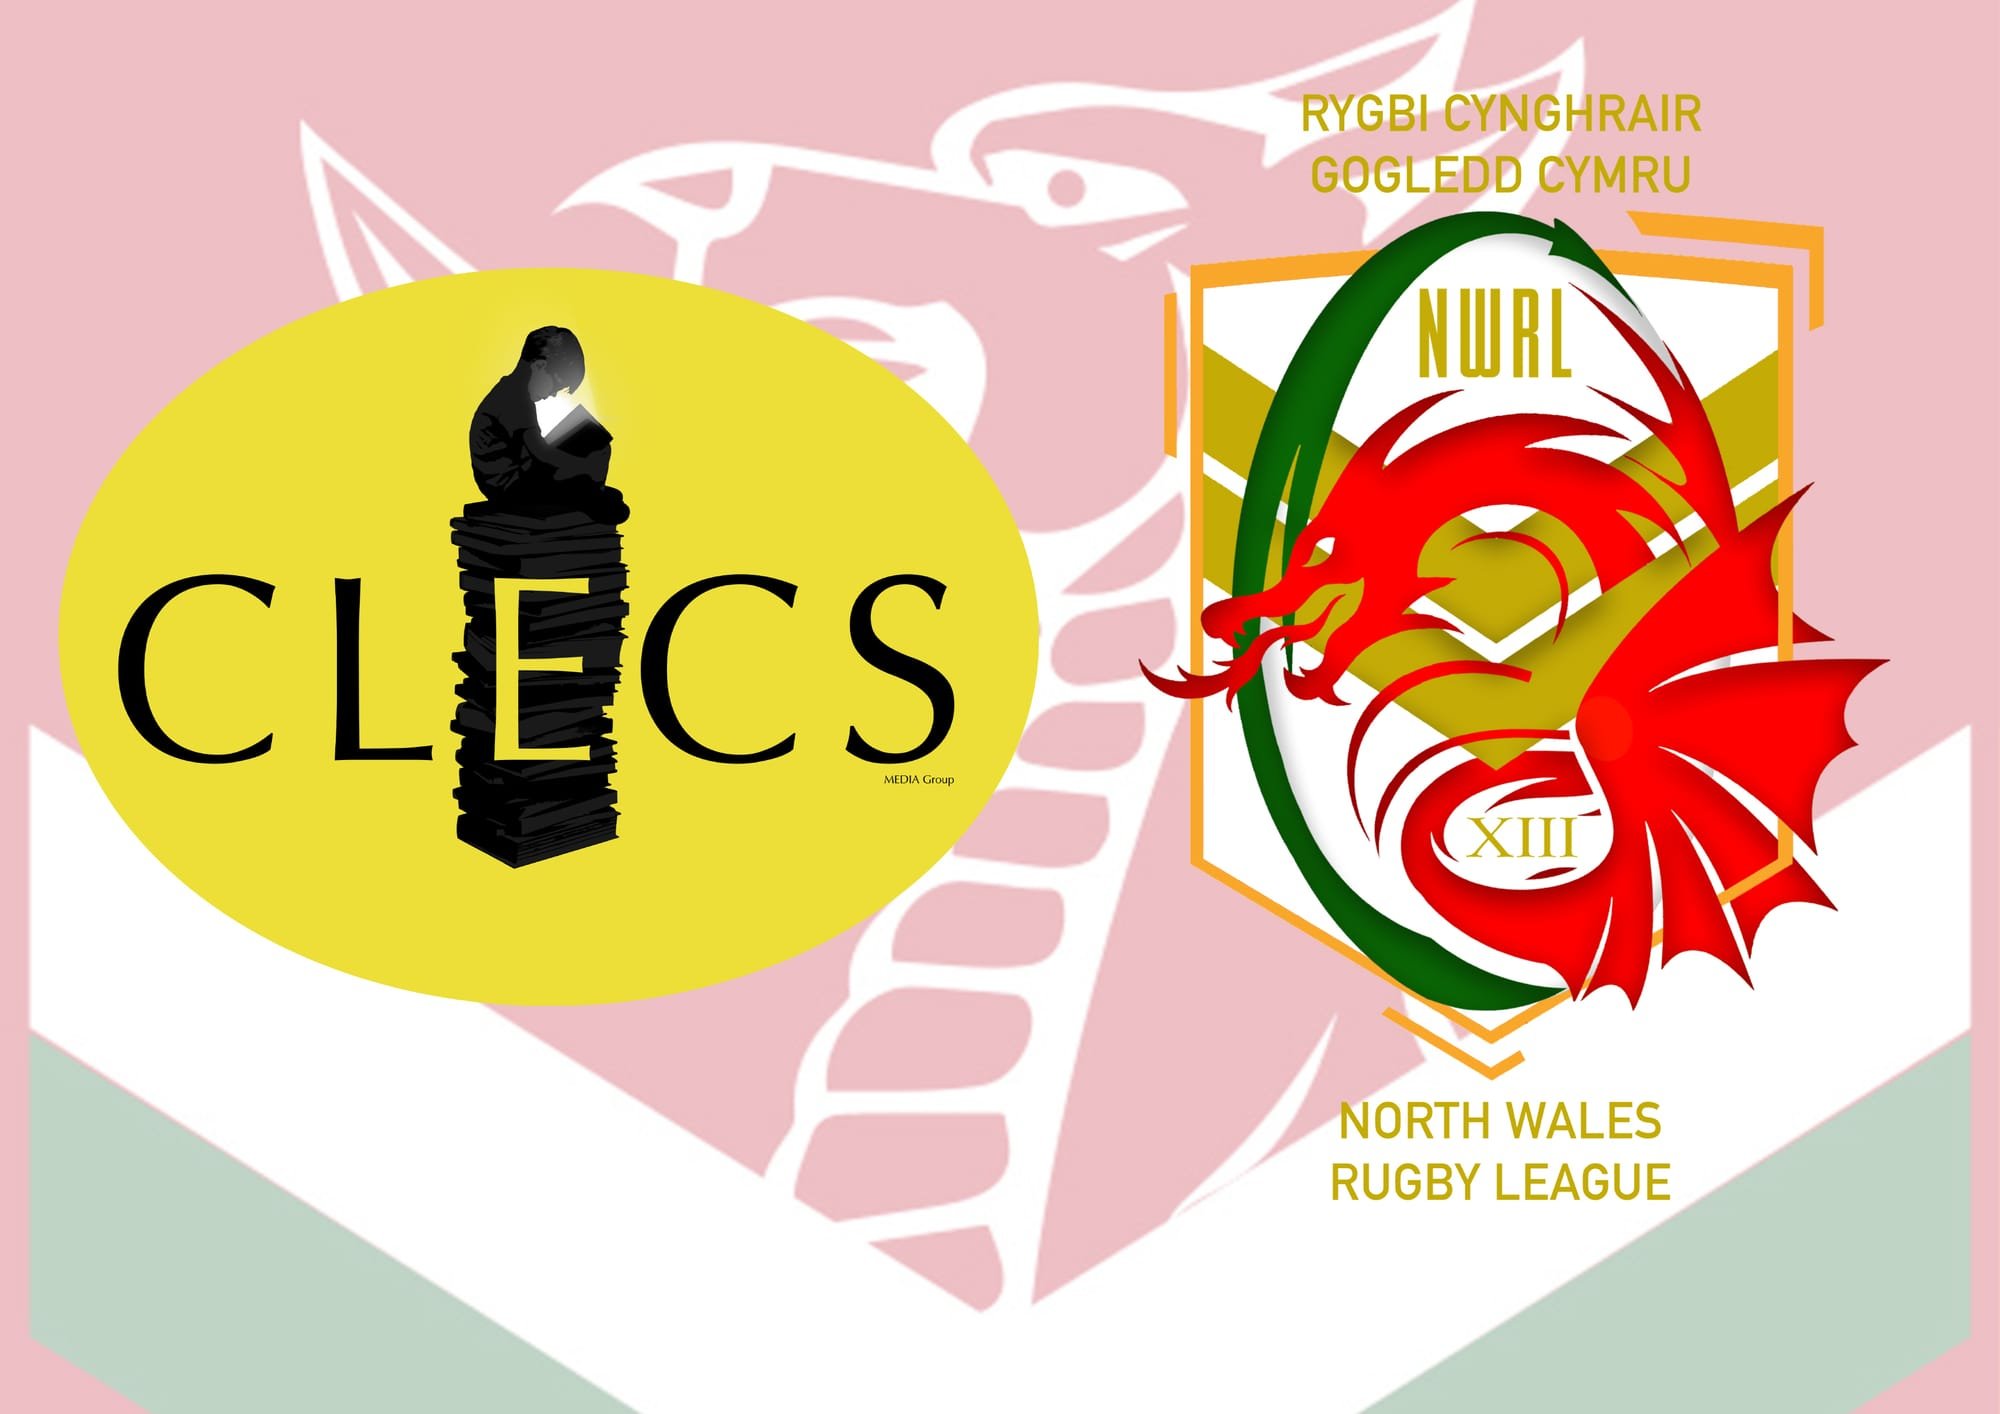 Clecs Media North Wales Men’s League to kick-off on Saturday 4 June